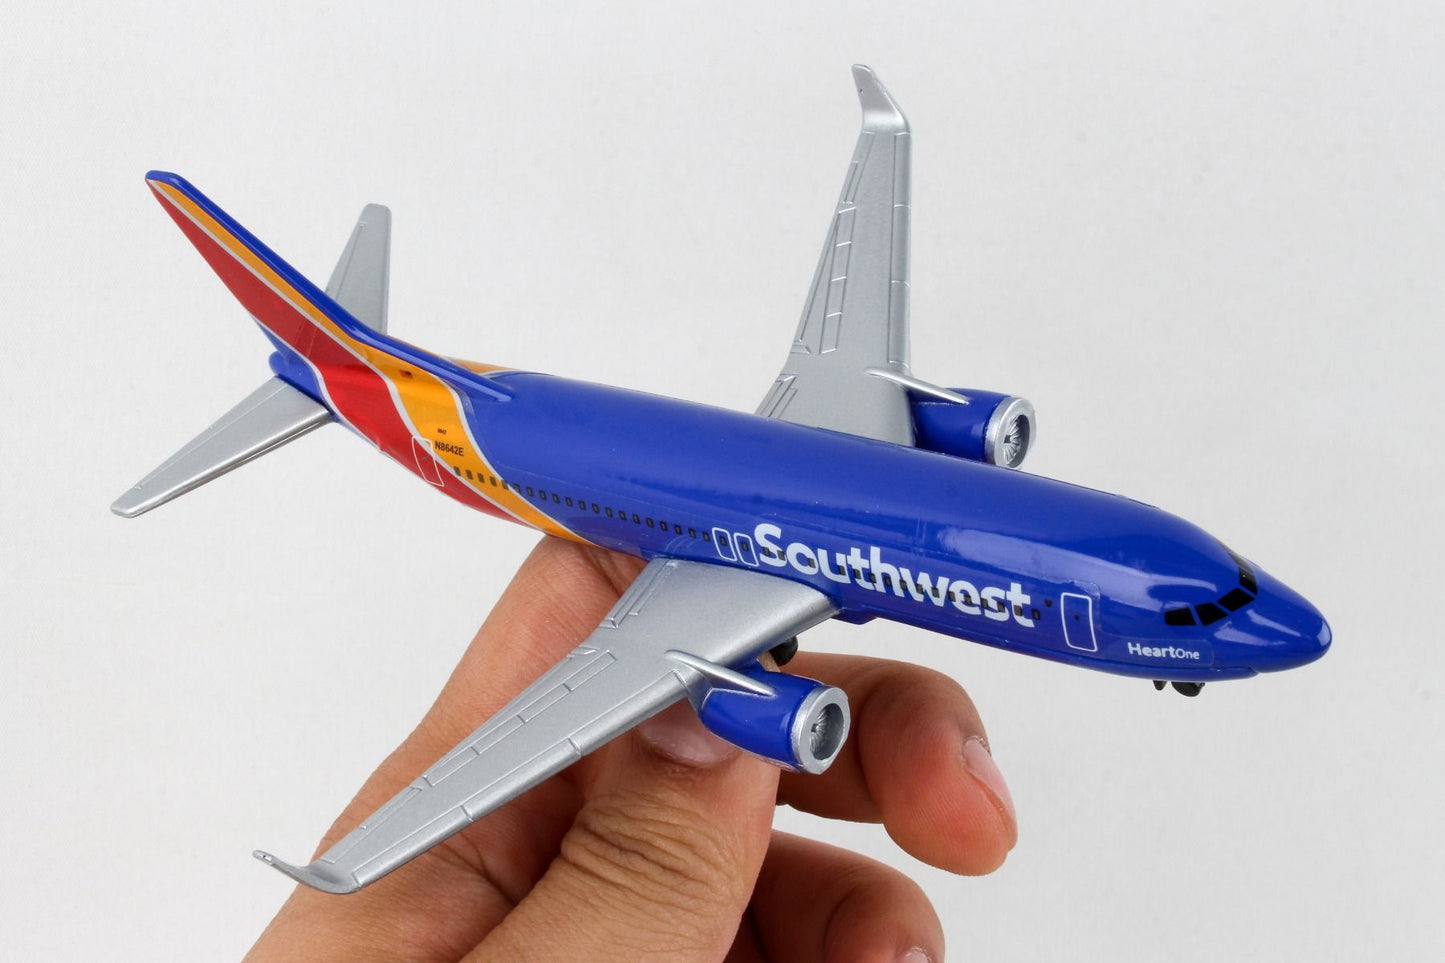 Southwest Single Plane "New Heart Livery" Toy